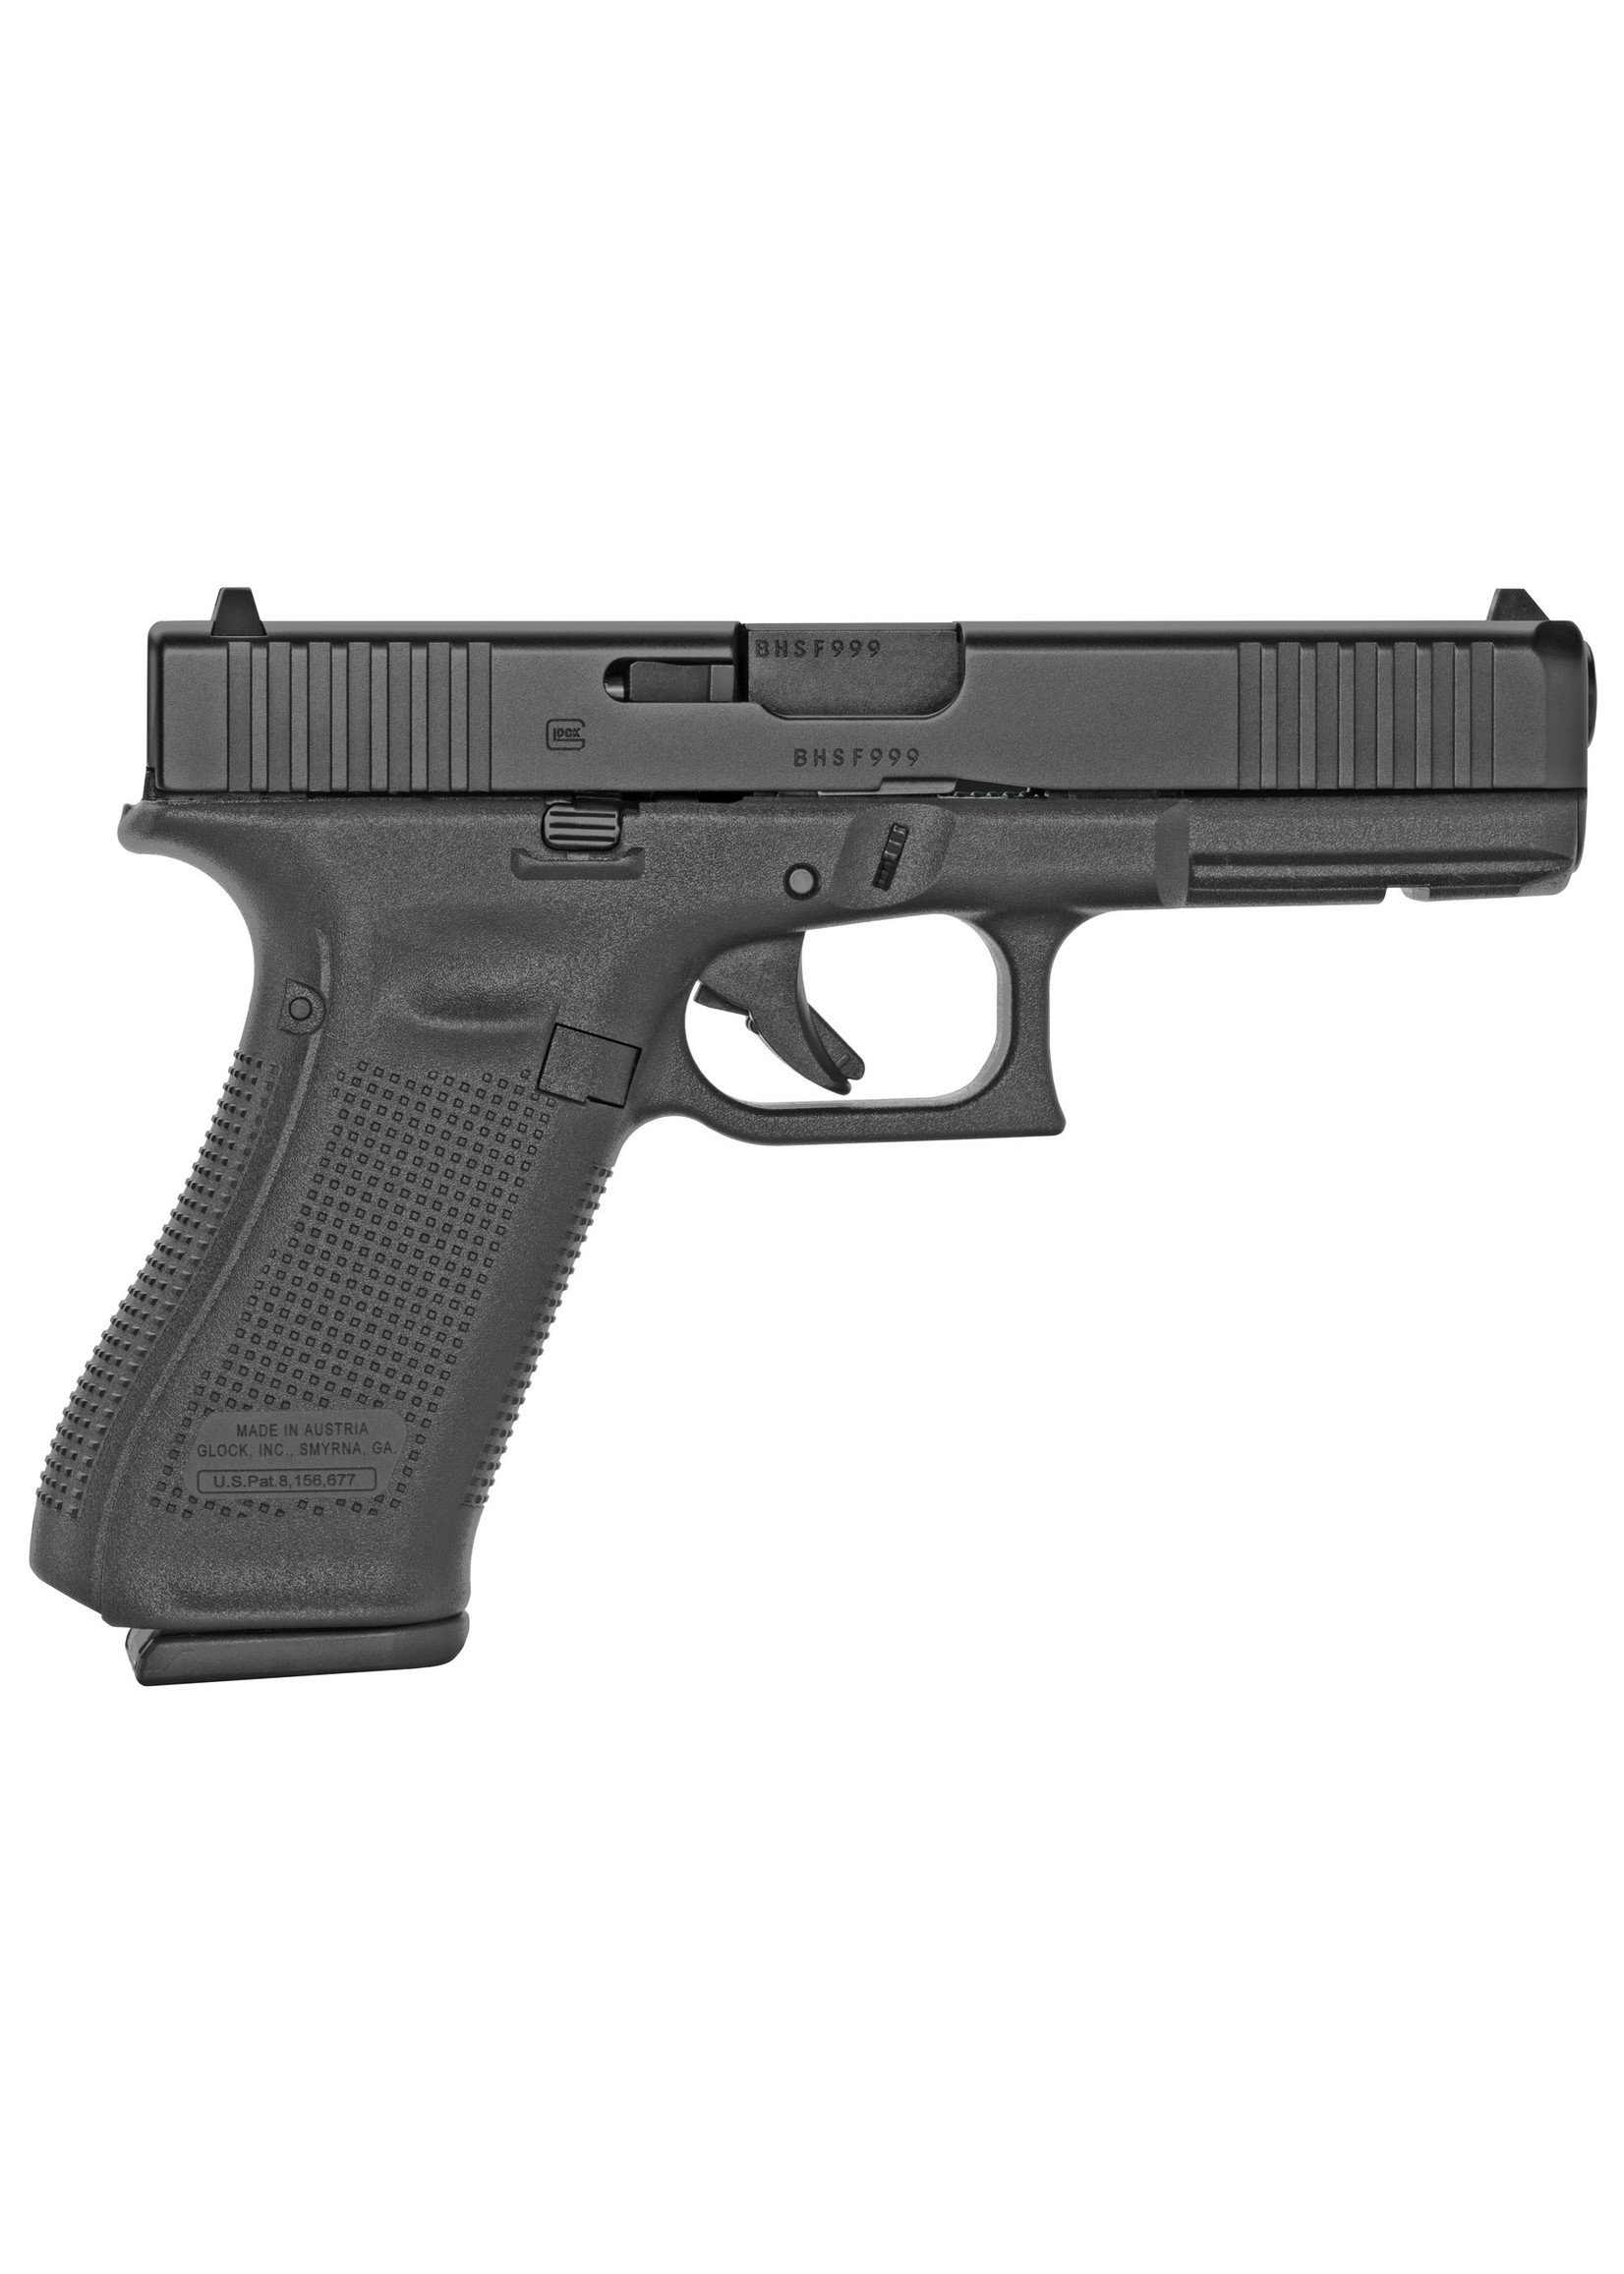 Glock Glock, 19 Gen3, Striker Fired, Semi-automatic, Polymer Frame Pistol, Compact, 9MM, 4.02" Barrel, Matte Finish, Black, Fixed Sights, 15 Rounds, 2 Magazines